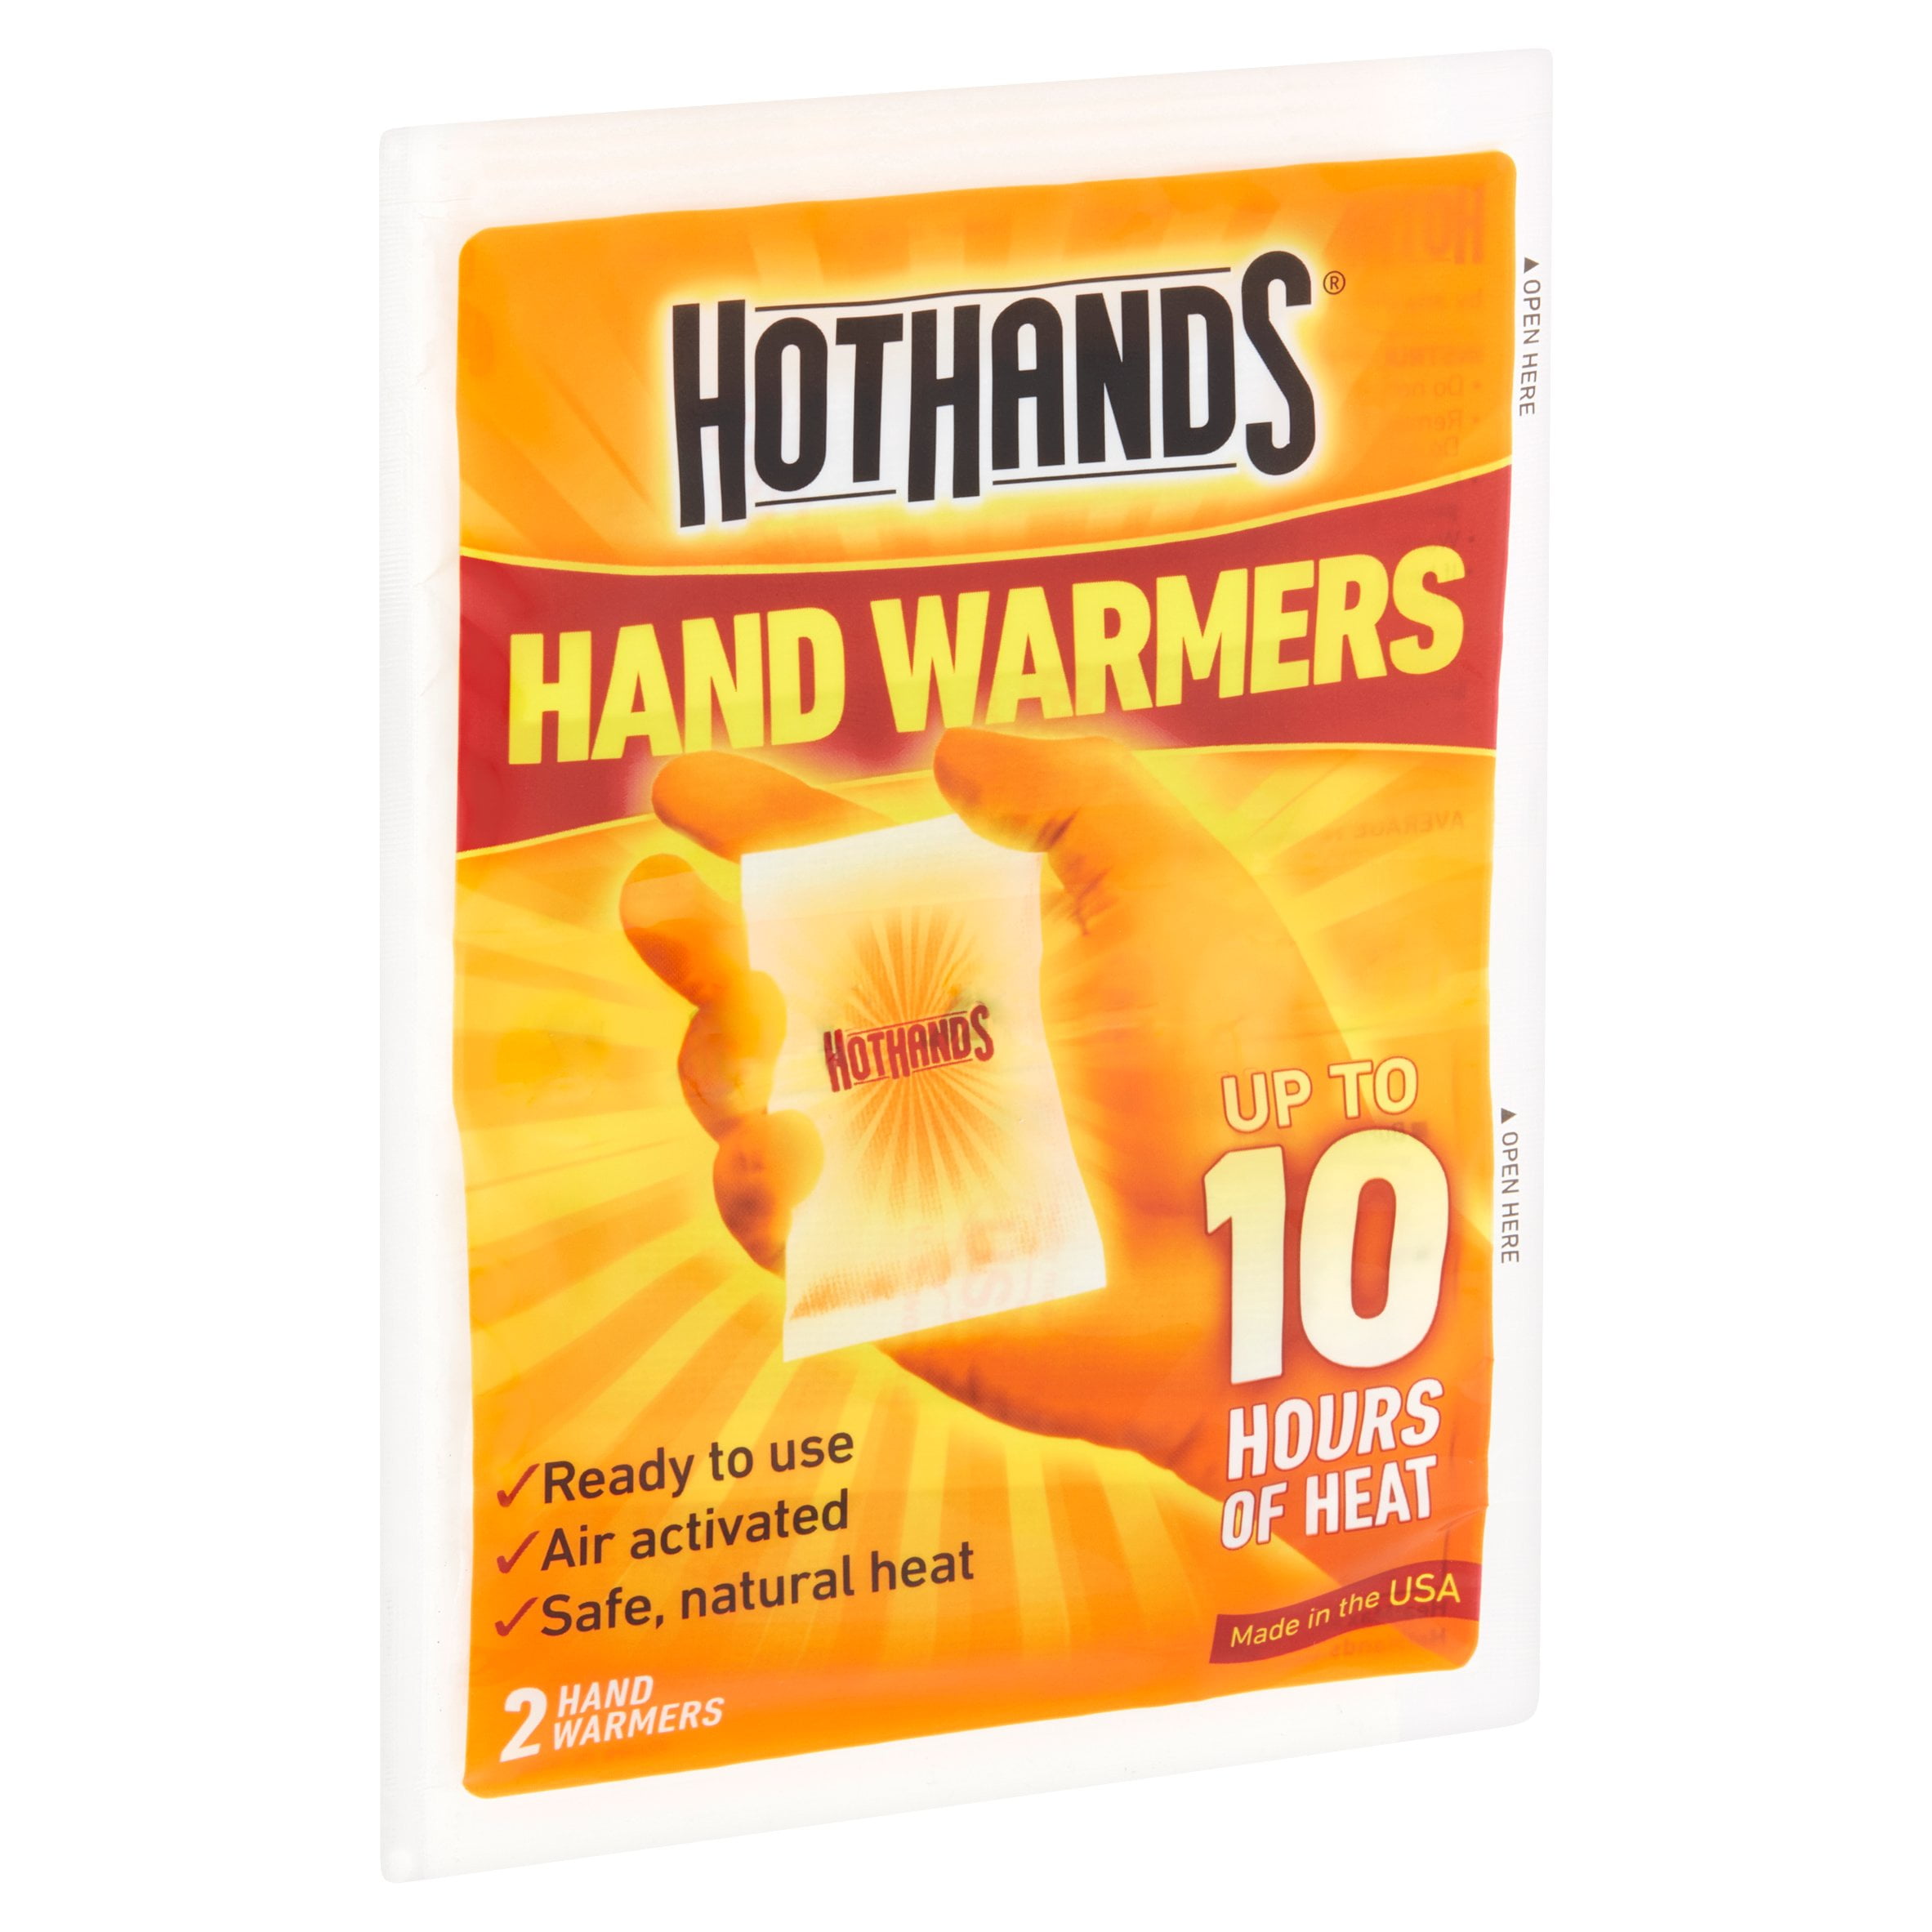 Hot Hands Hand Warmers HotHands Packs Pocket Heat Gloves 10 HOURS HEAT 